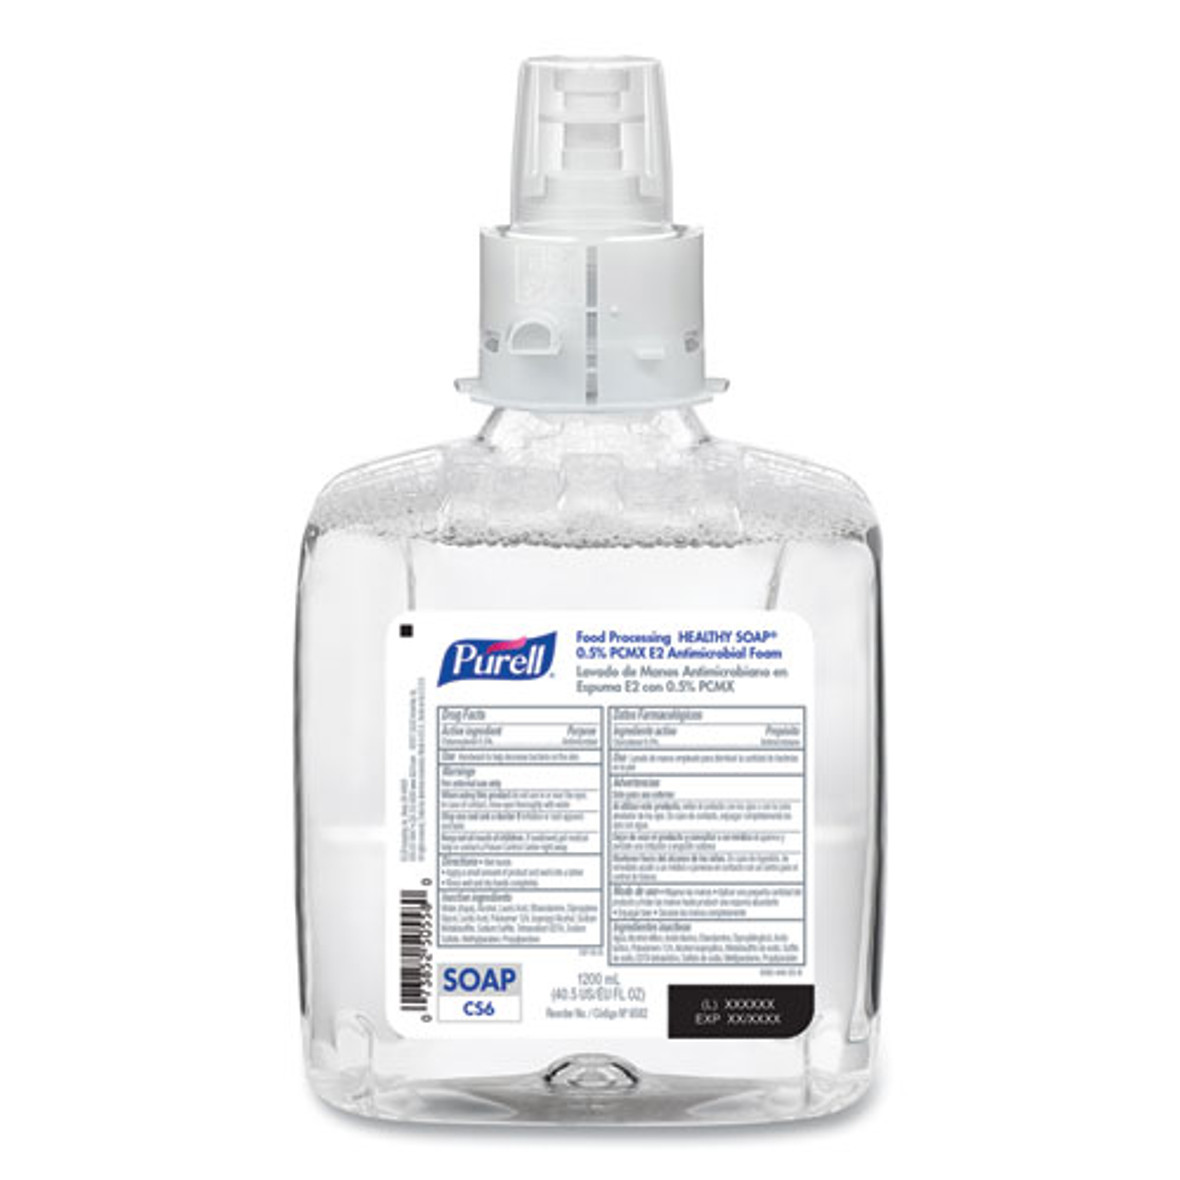 PURELL® Food Processing HEALTHY SOAP 0.5% PCMX Antimicrobial E2 Foam Handwash